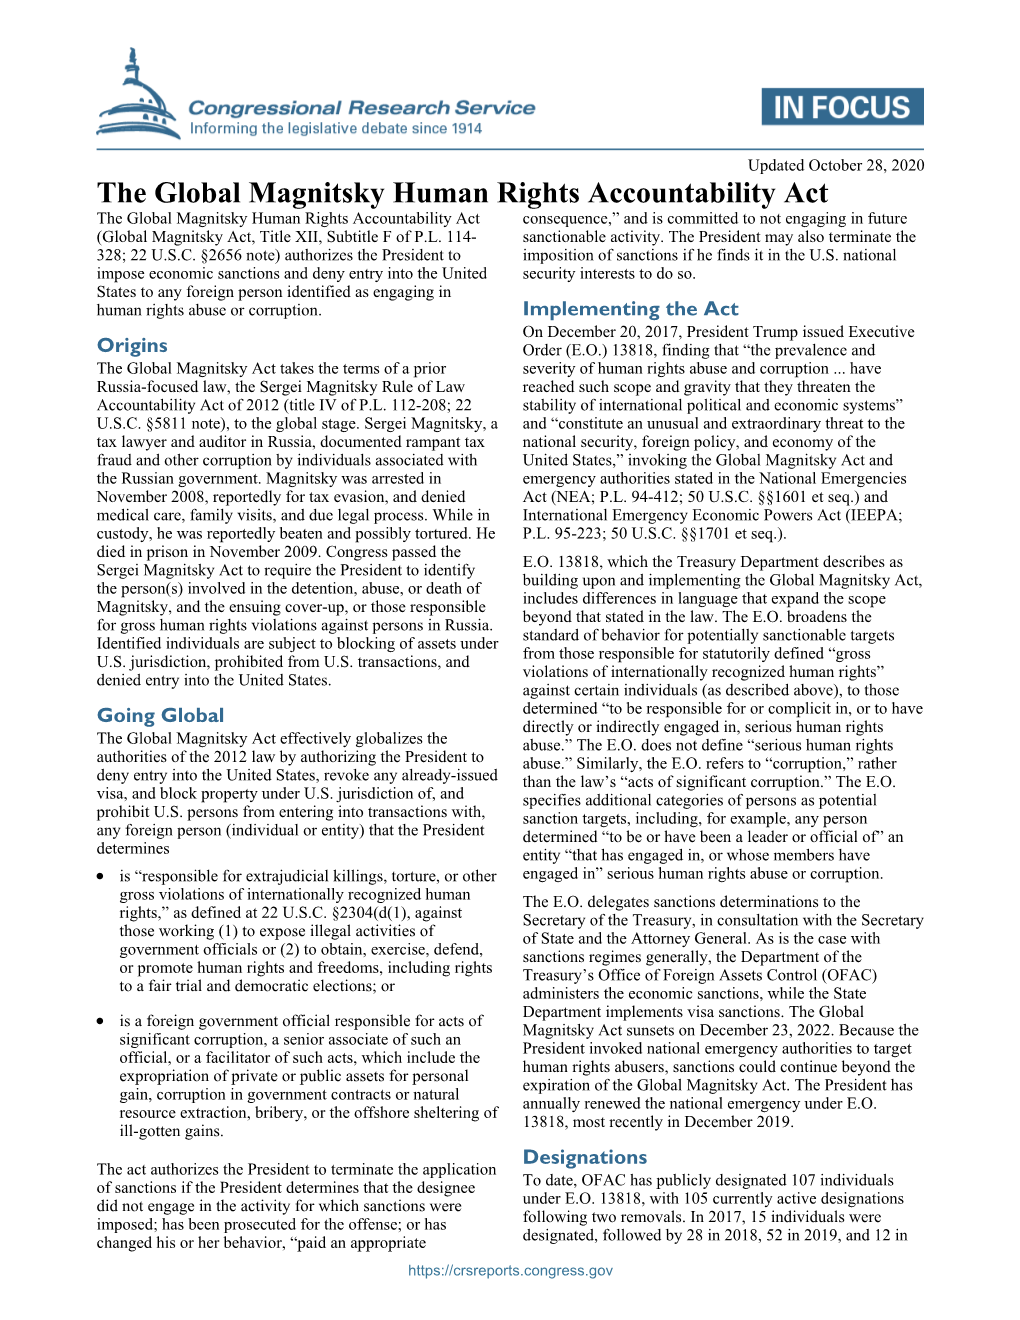 The Global Magnitsky Human Rights Accountability